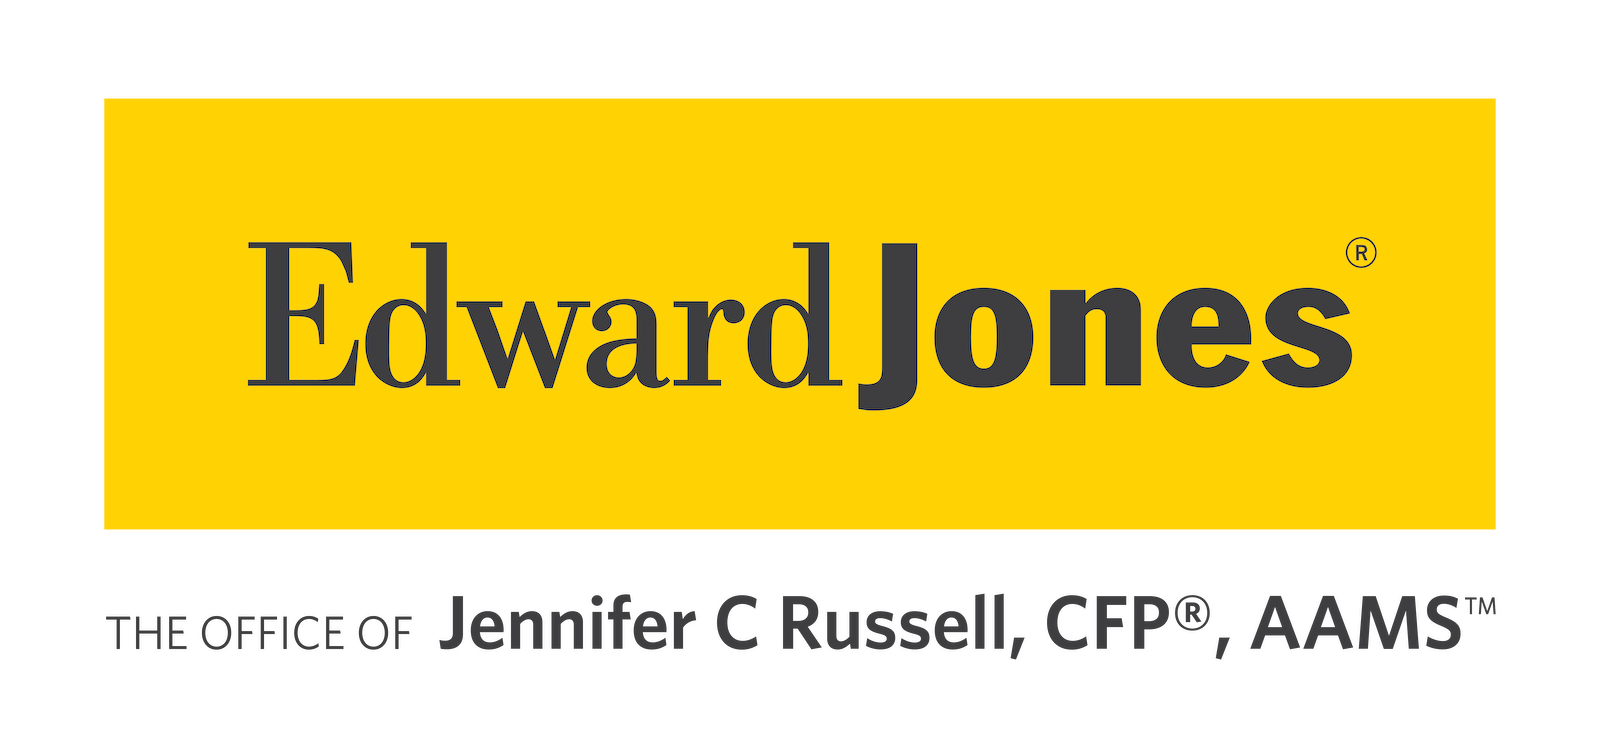 Edward Jones - Jennifer Russell